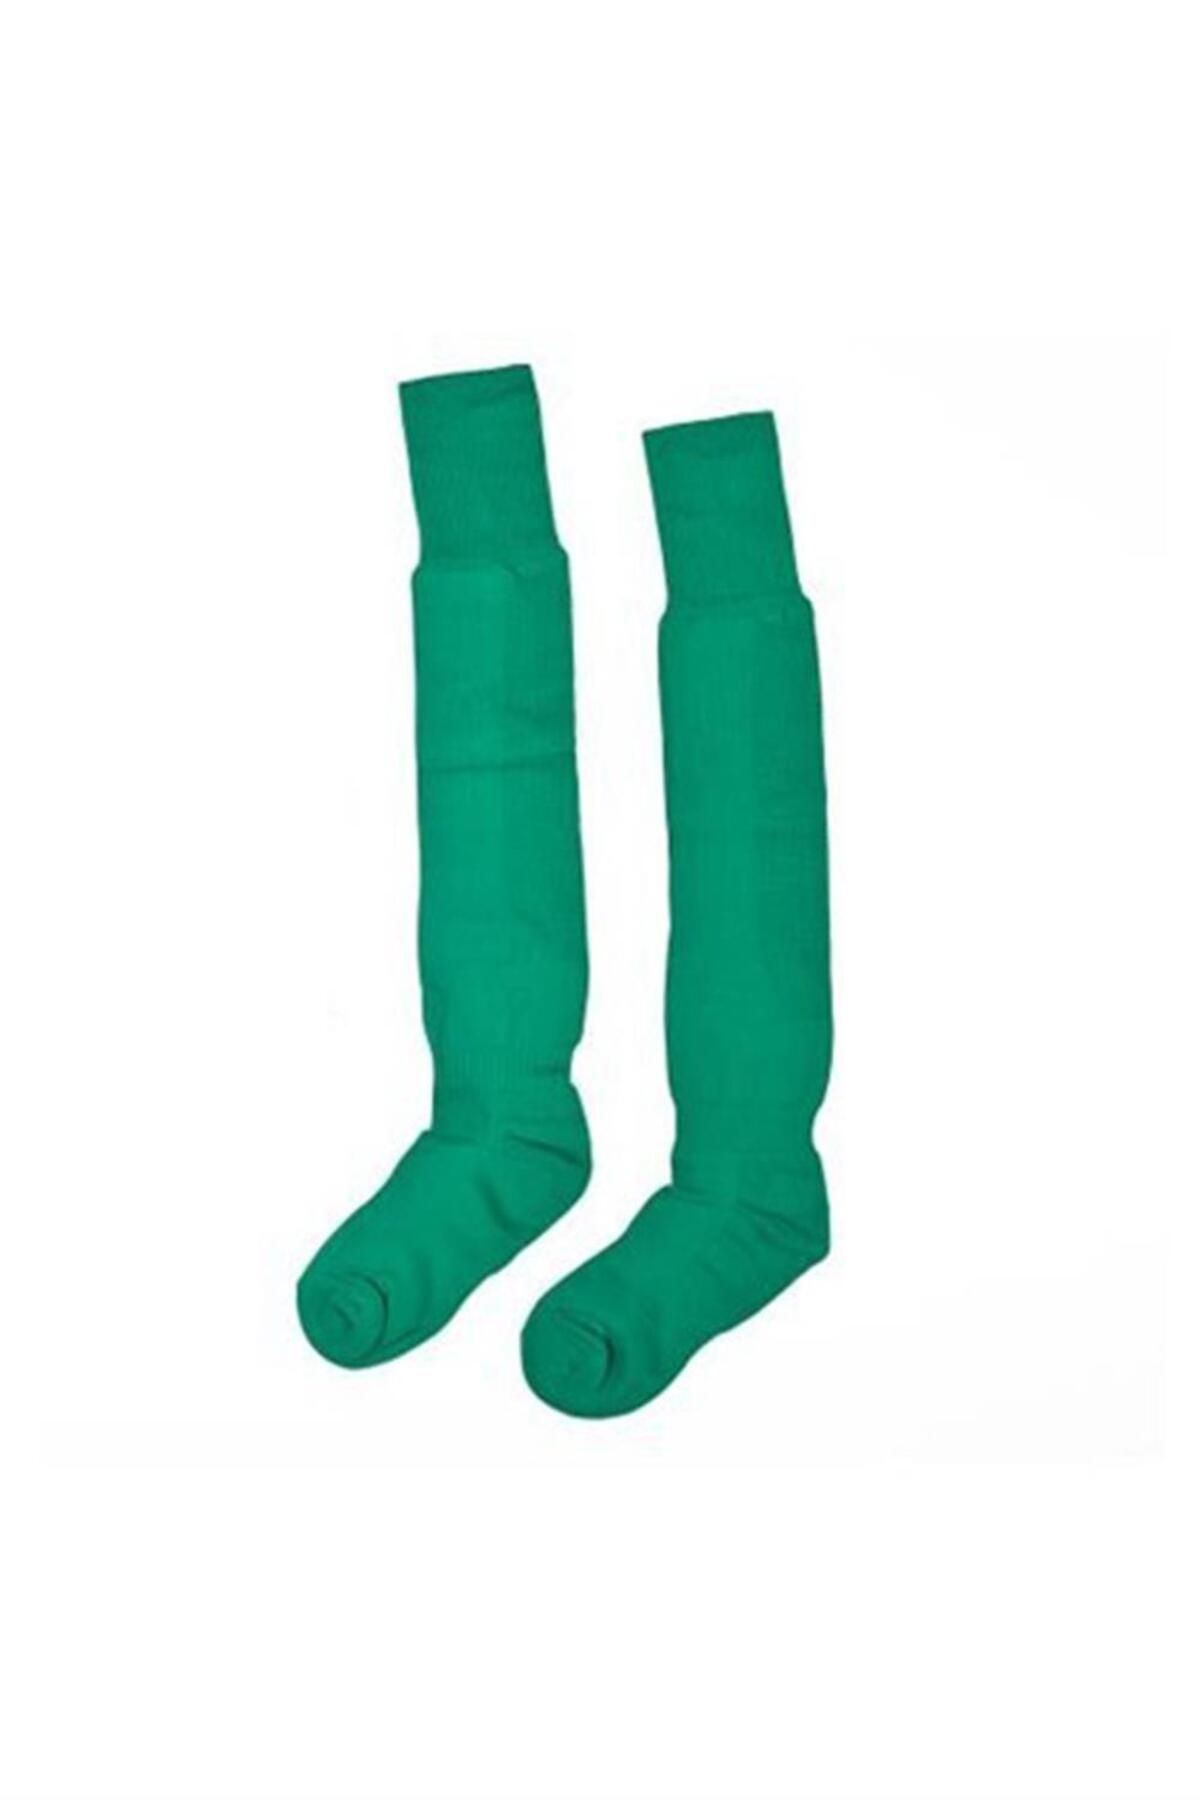 Lotto Sock Team Long Yeşil Tozluk M1076-yeşil